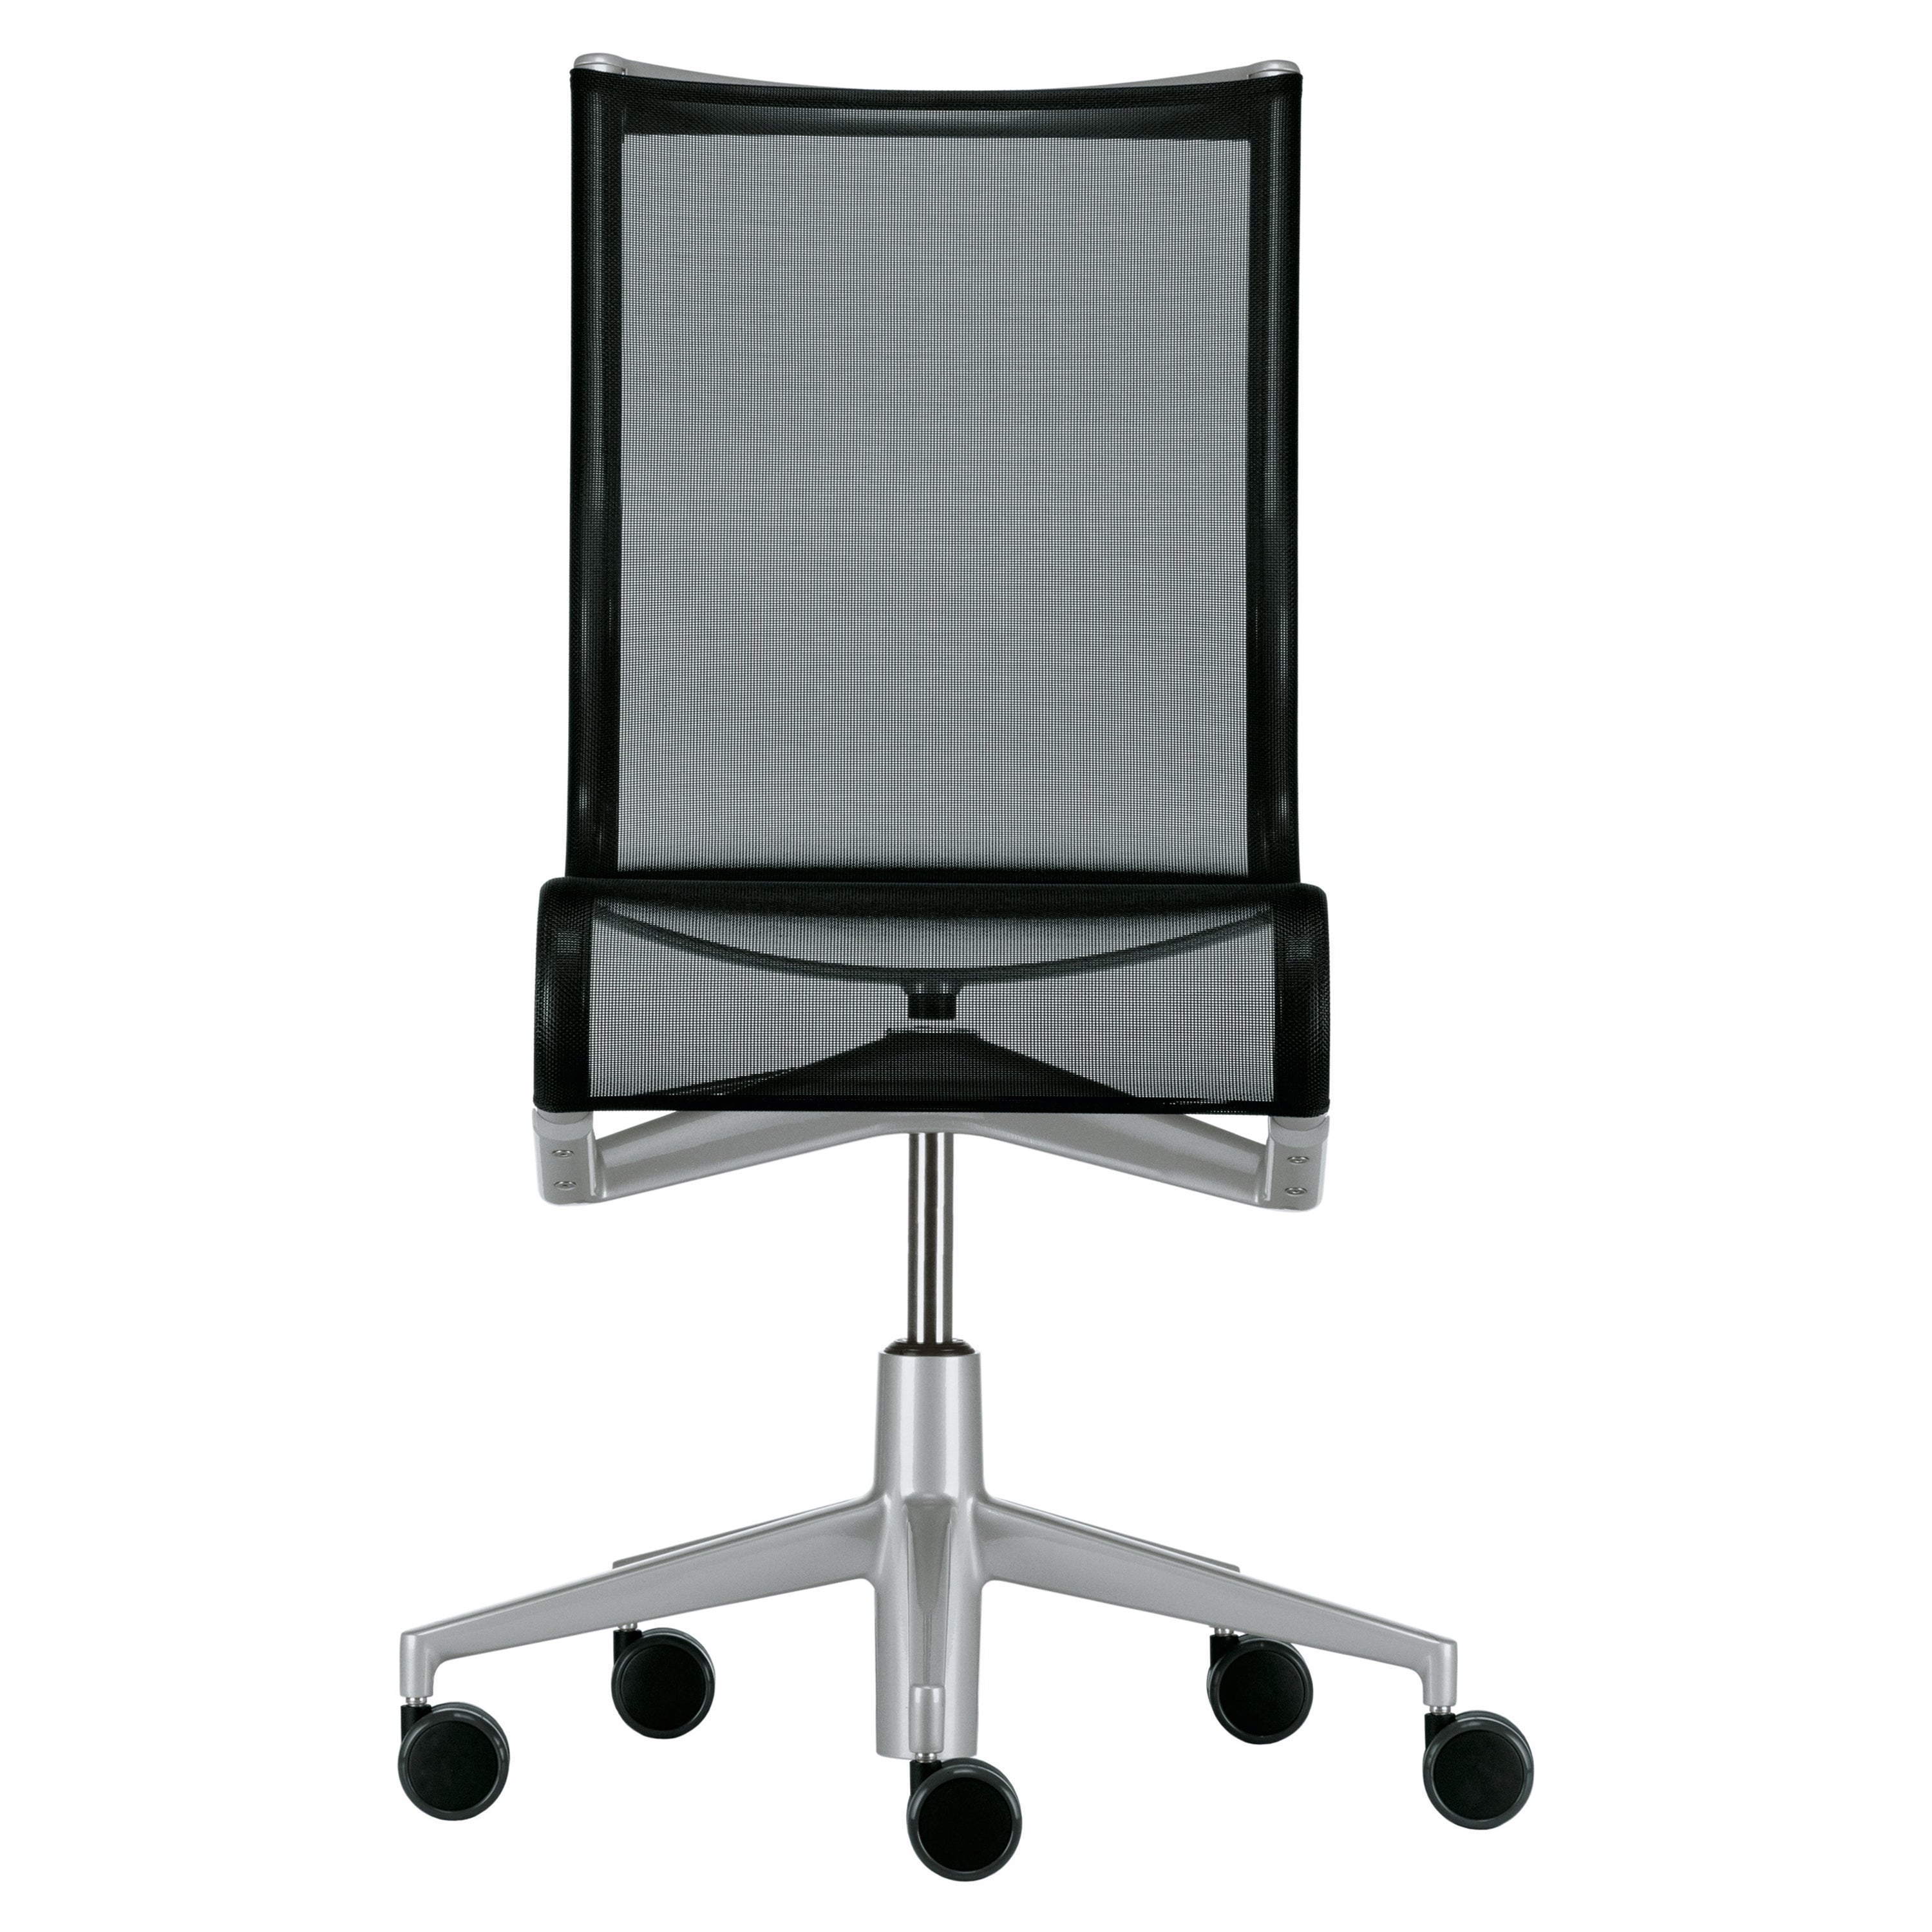 Alias 432 Rollingframe 44, Stuhl aus schwarzem Mesh mit grau lackiertem Aluminiumrahmen